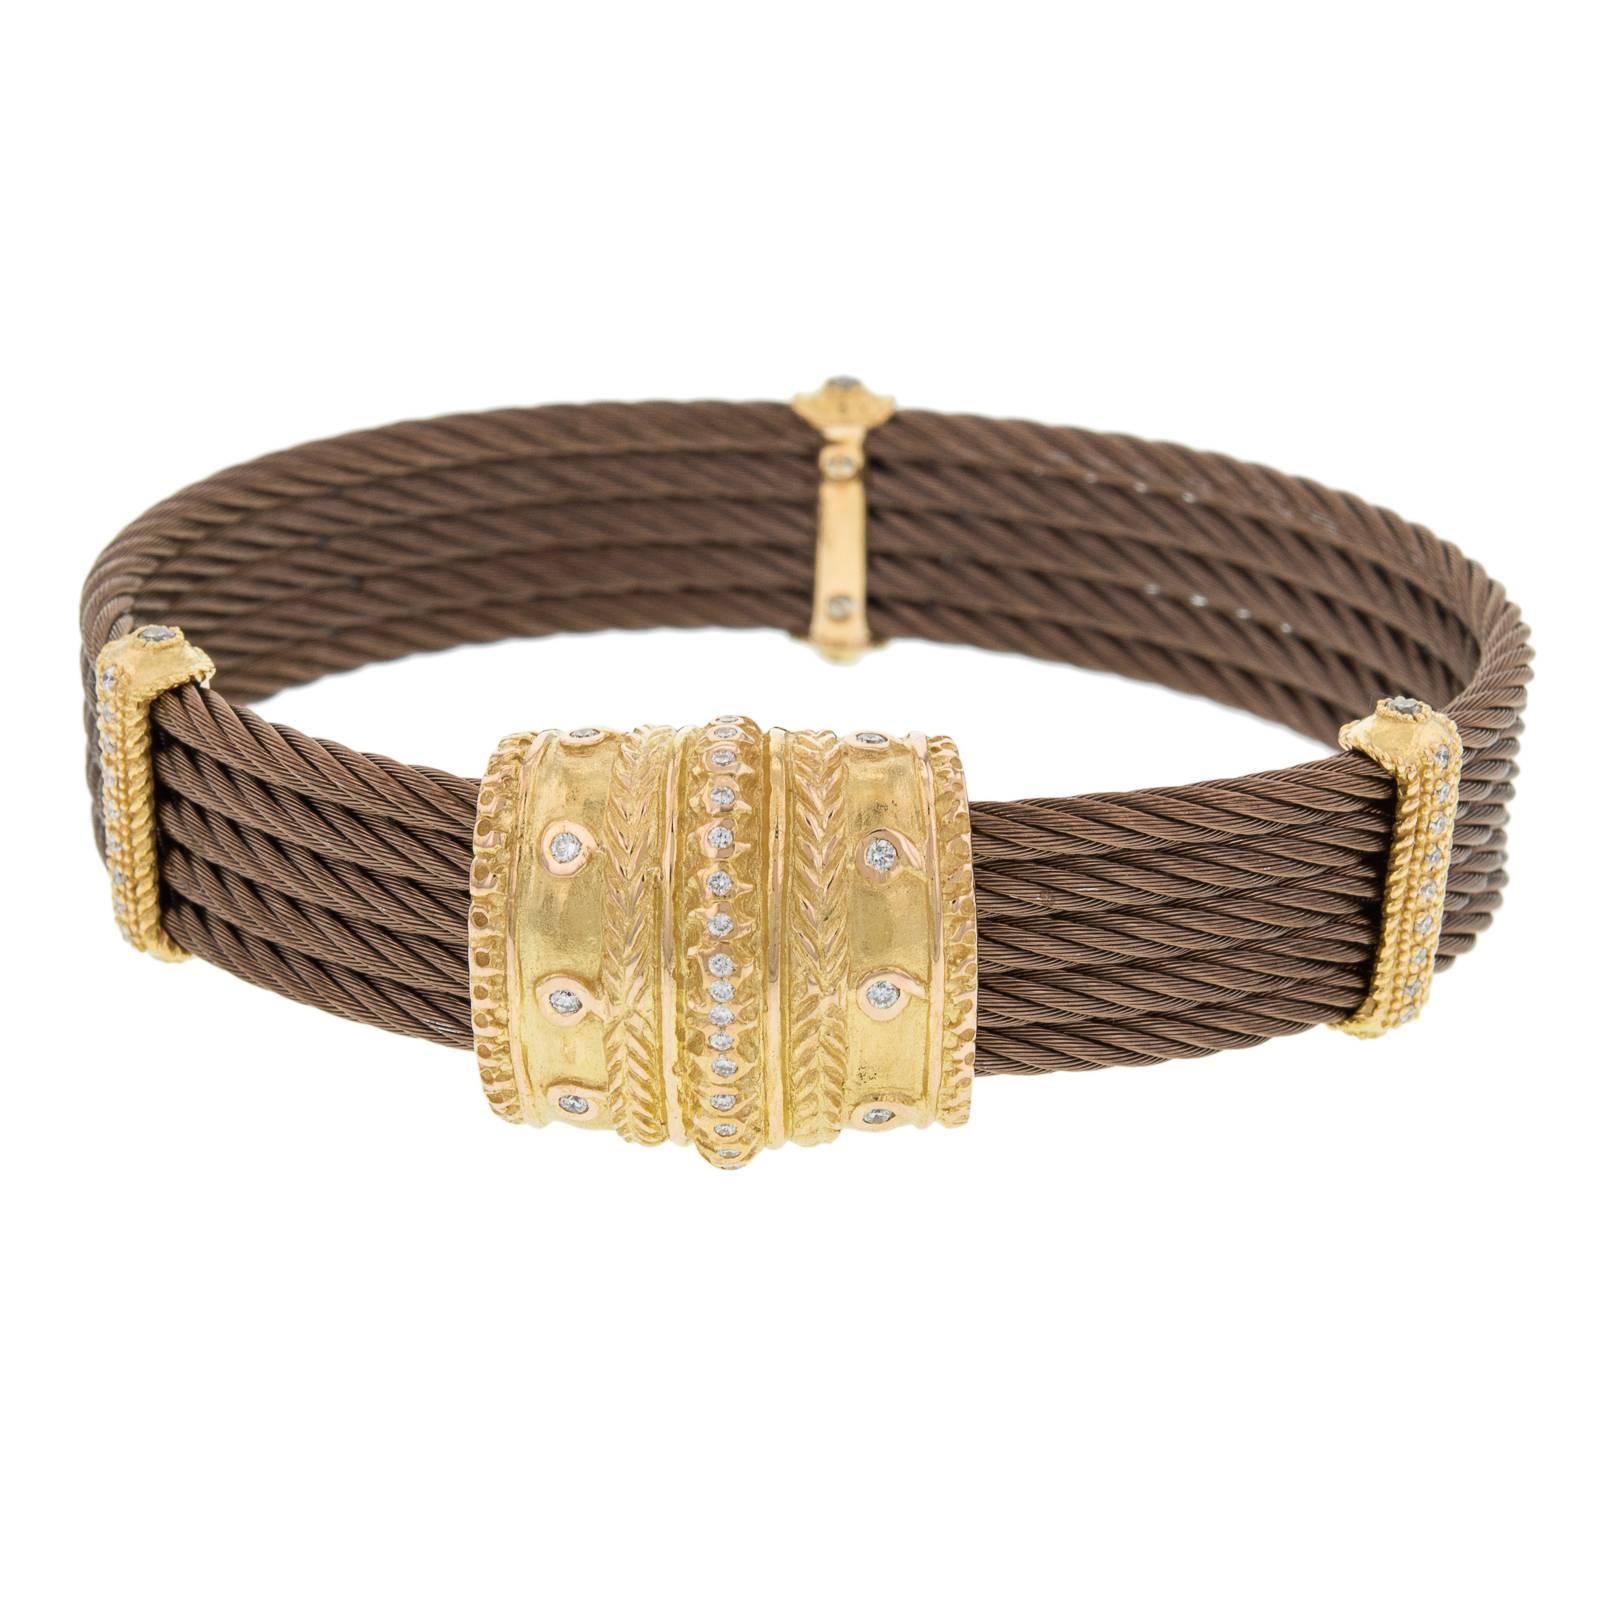 Charriol Celtique Cuff Bracelet in 18 Karat Yellow Gold with Diamonds